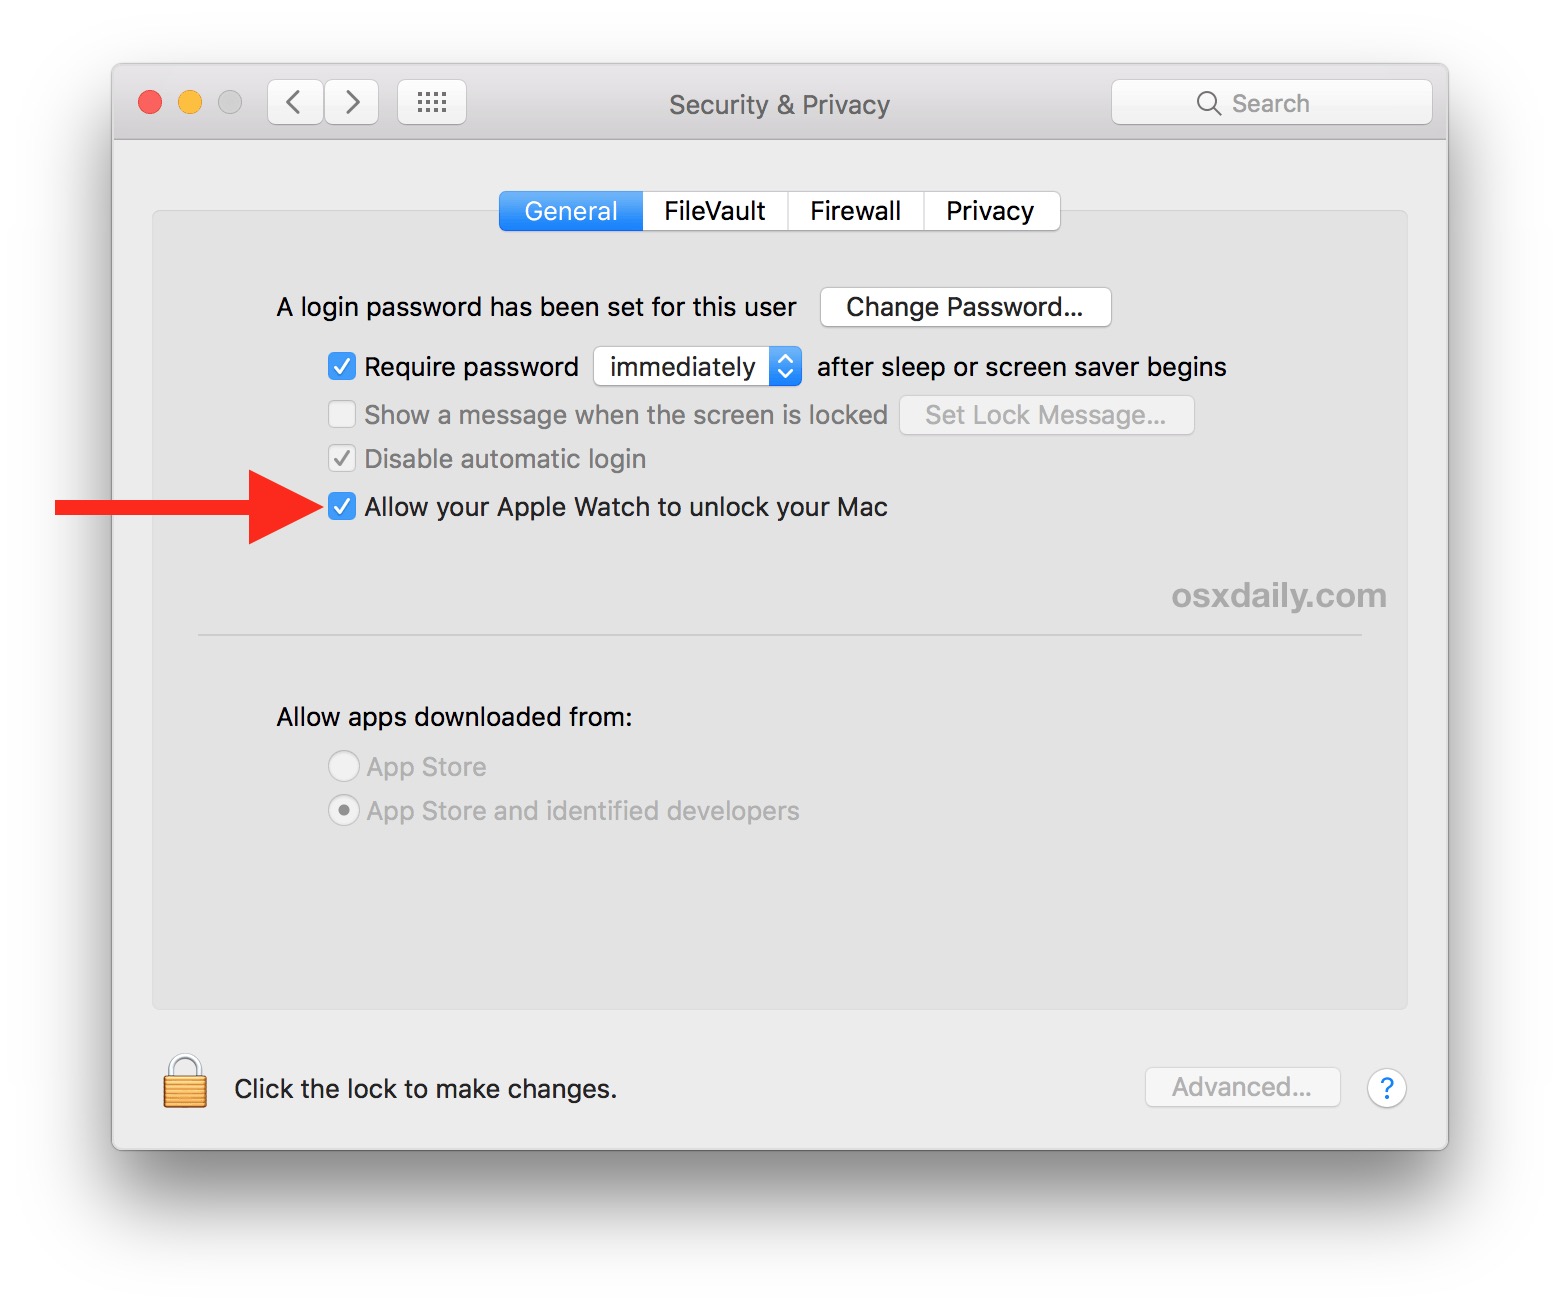 Apple Watch To Unlock Your Mac Using An App